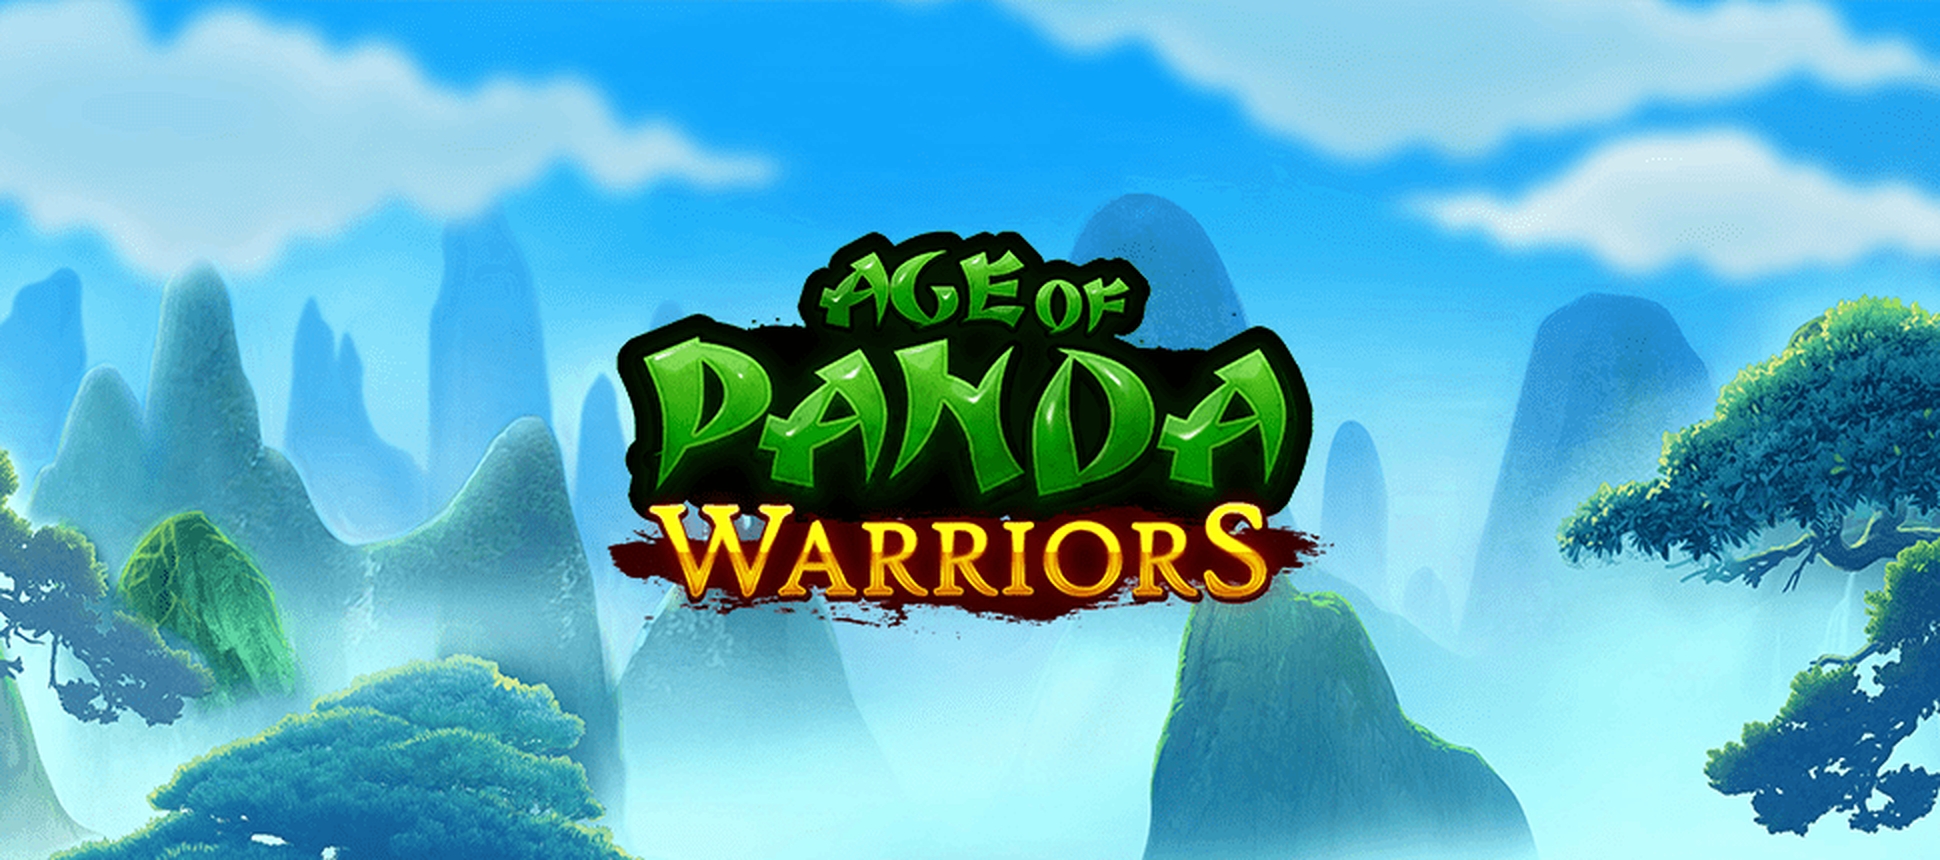 Age of Panda Warriors demo